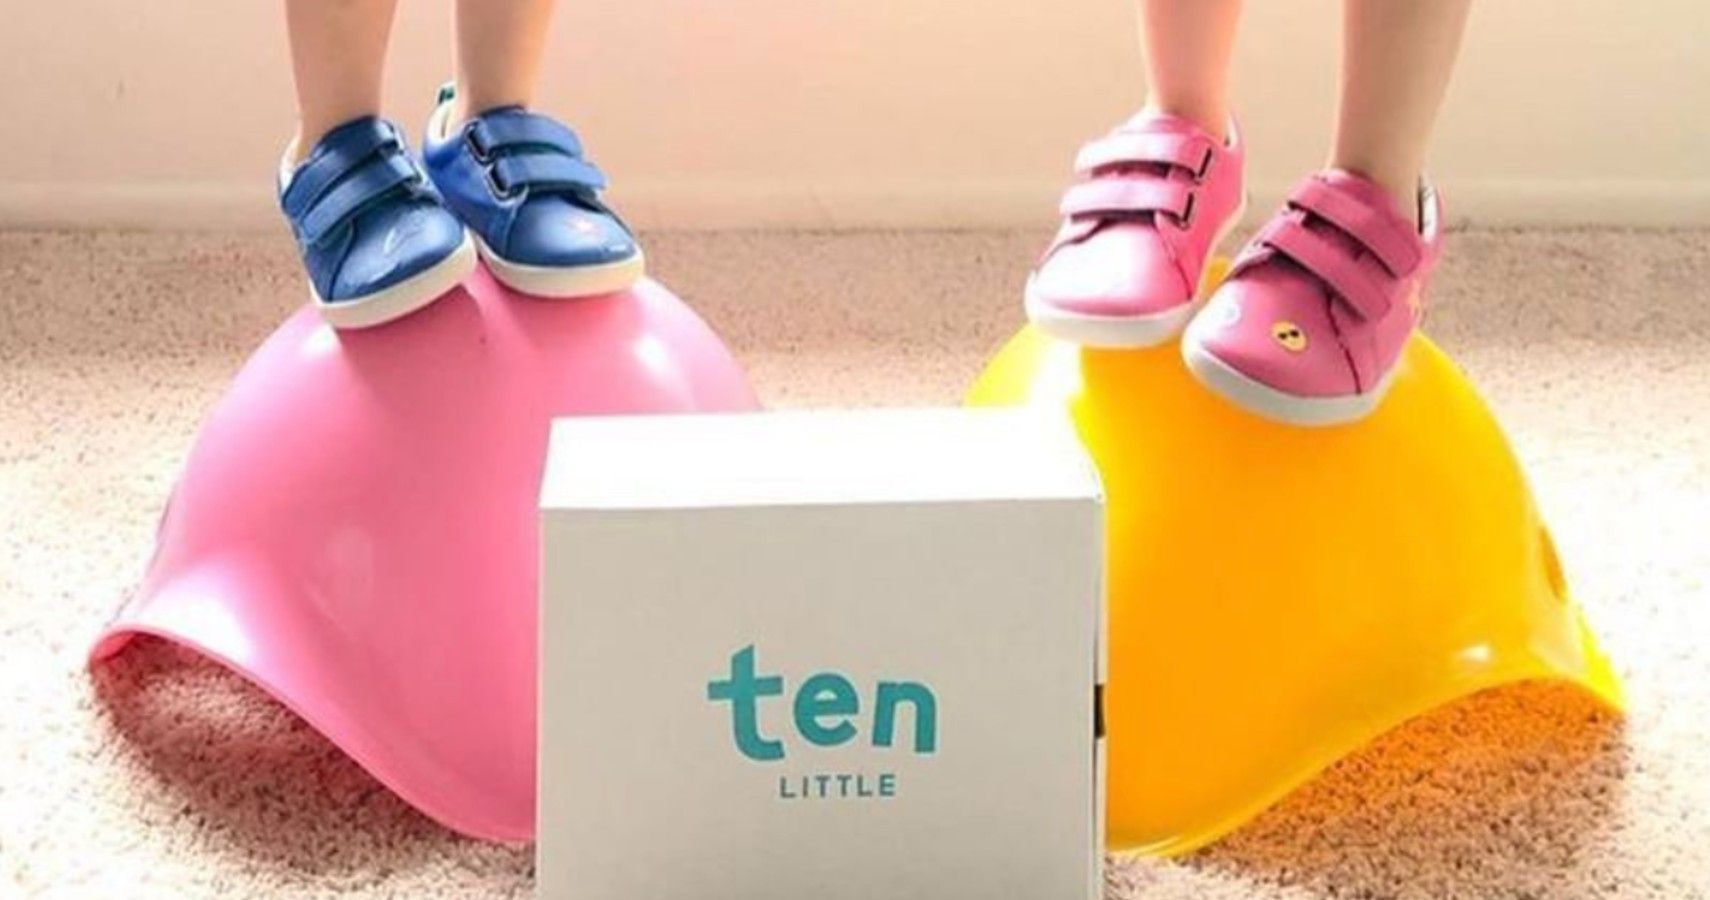 Ten Little Kids Shoe Shopping Finding Right Size